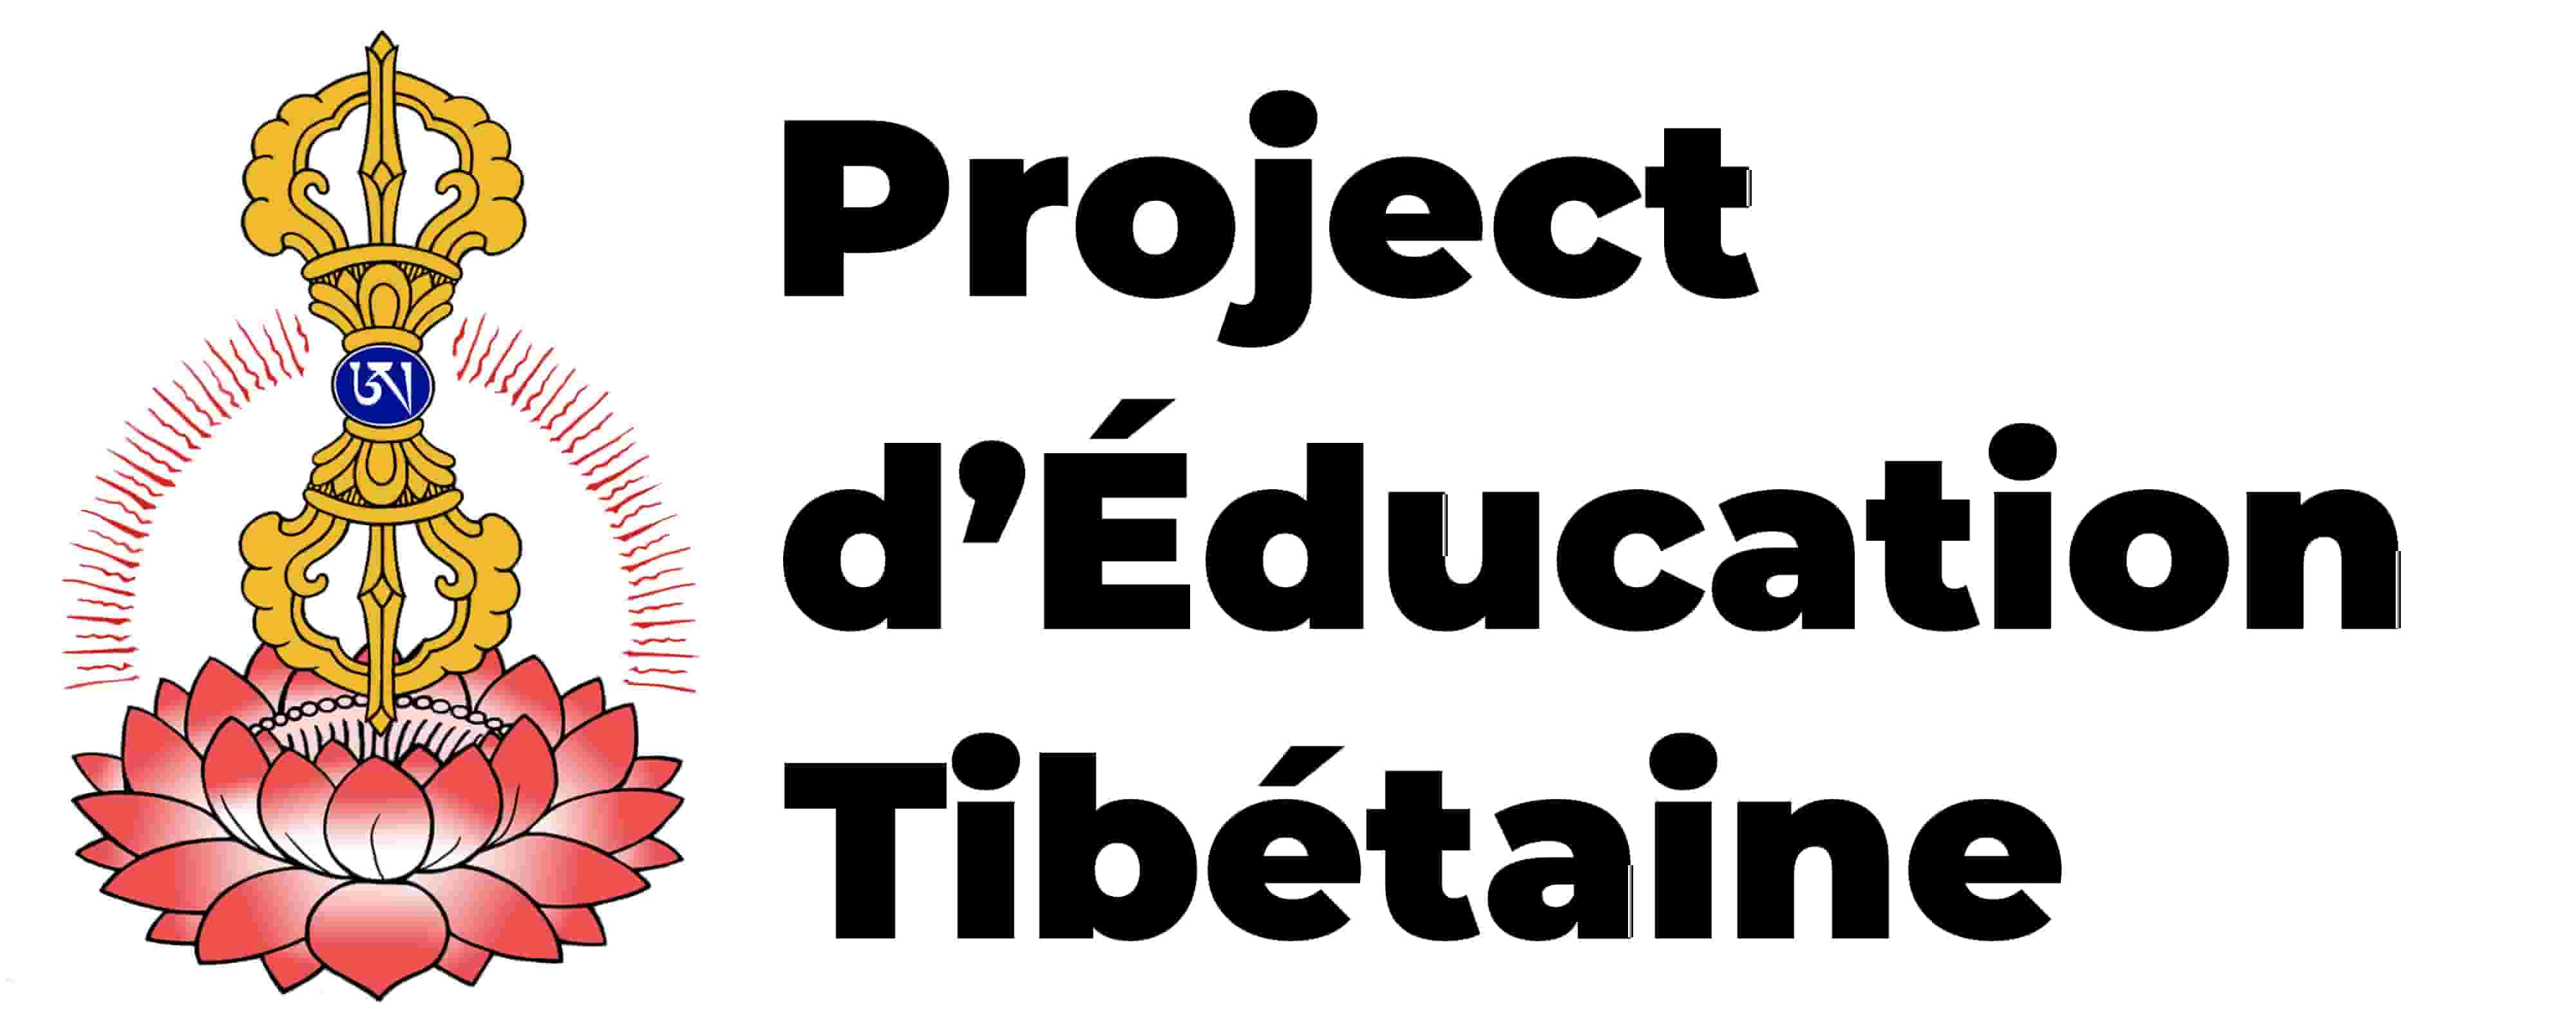 TIBETAN EDUCATION PROJECT